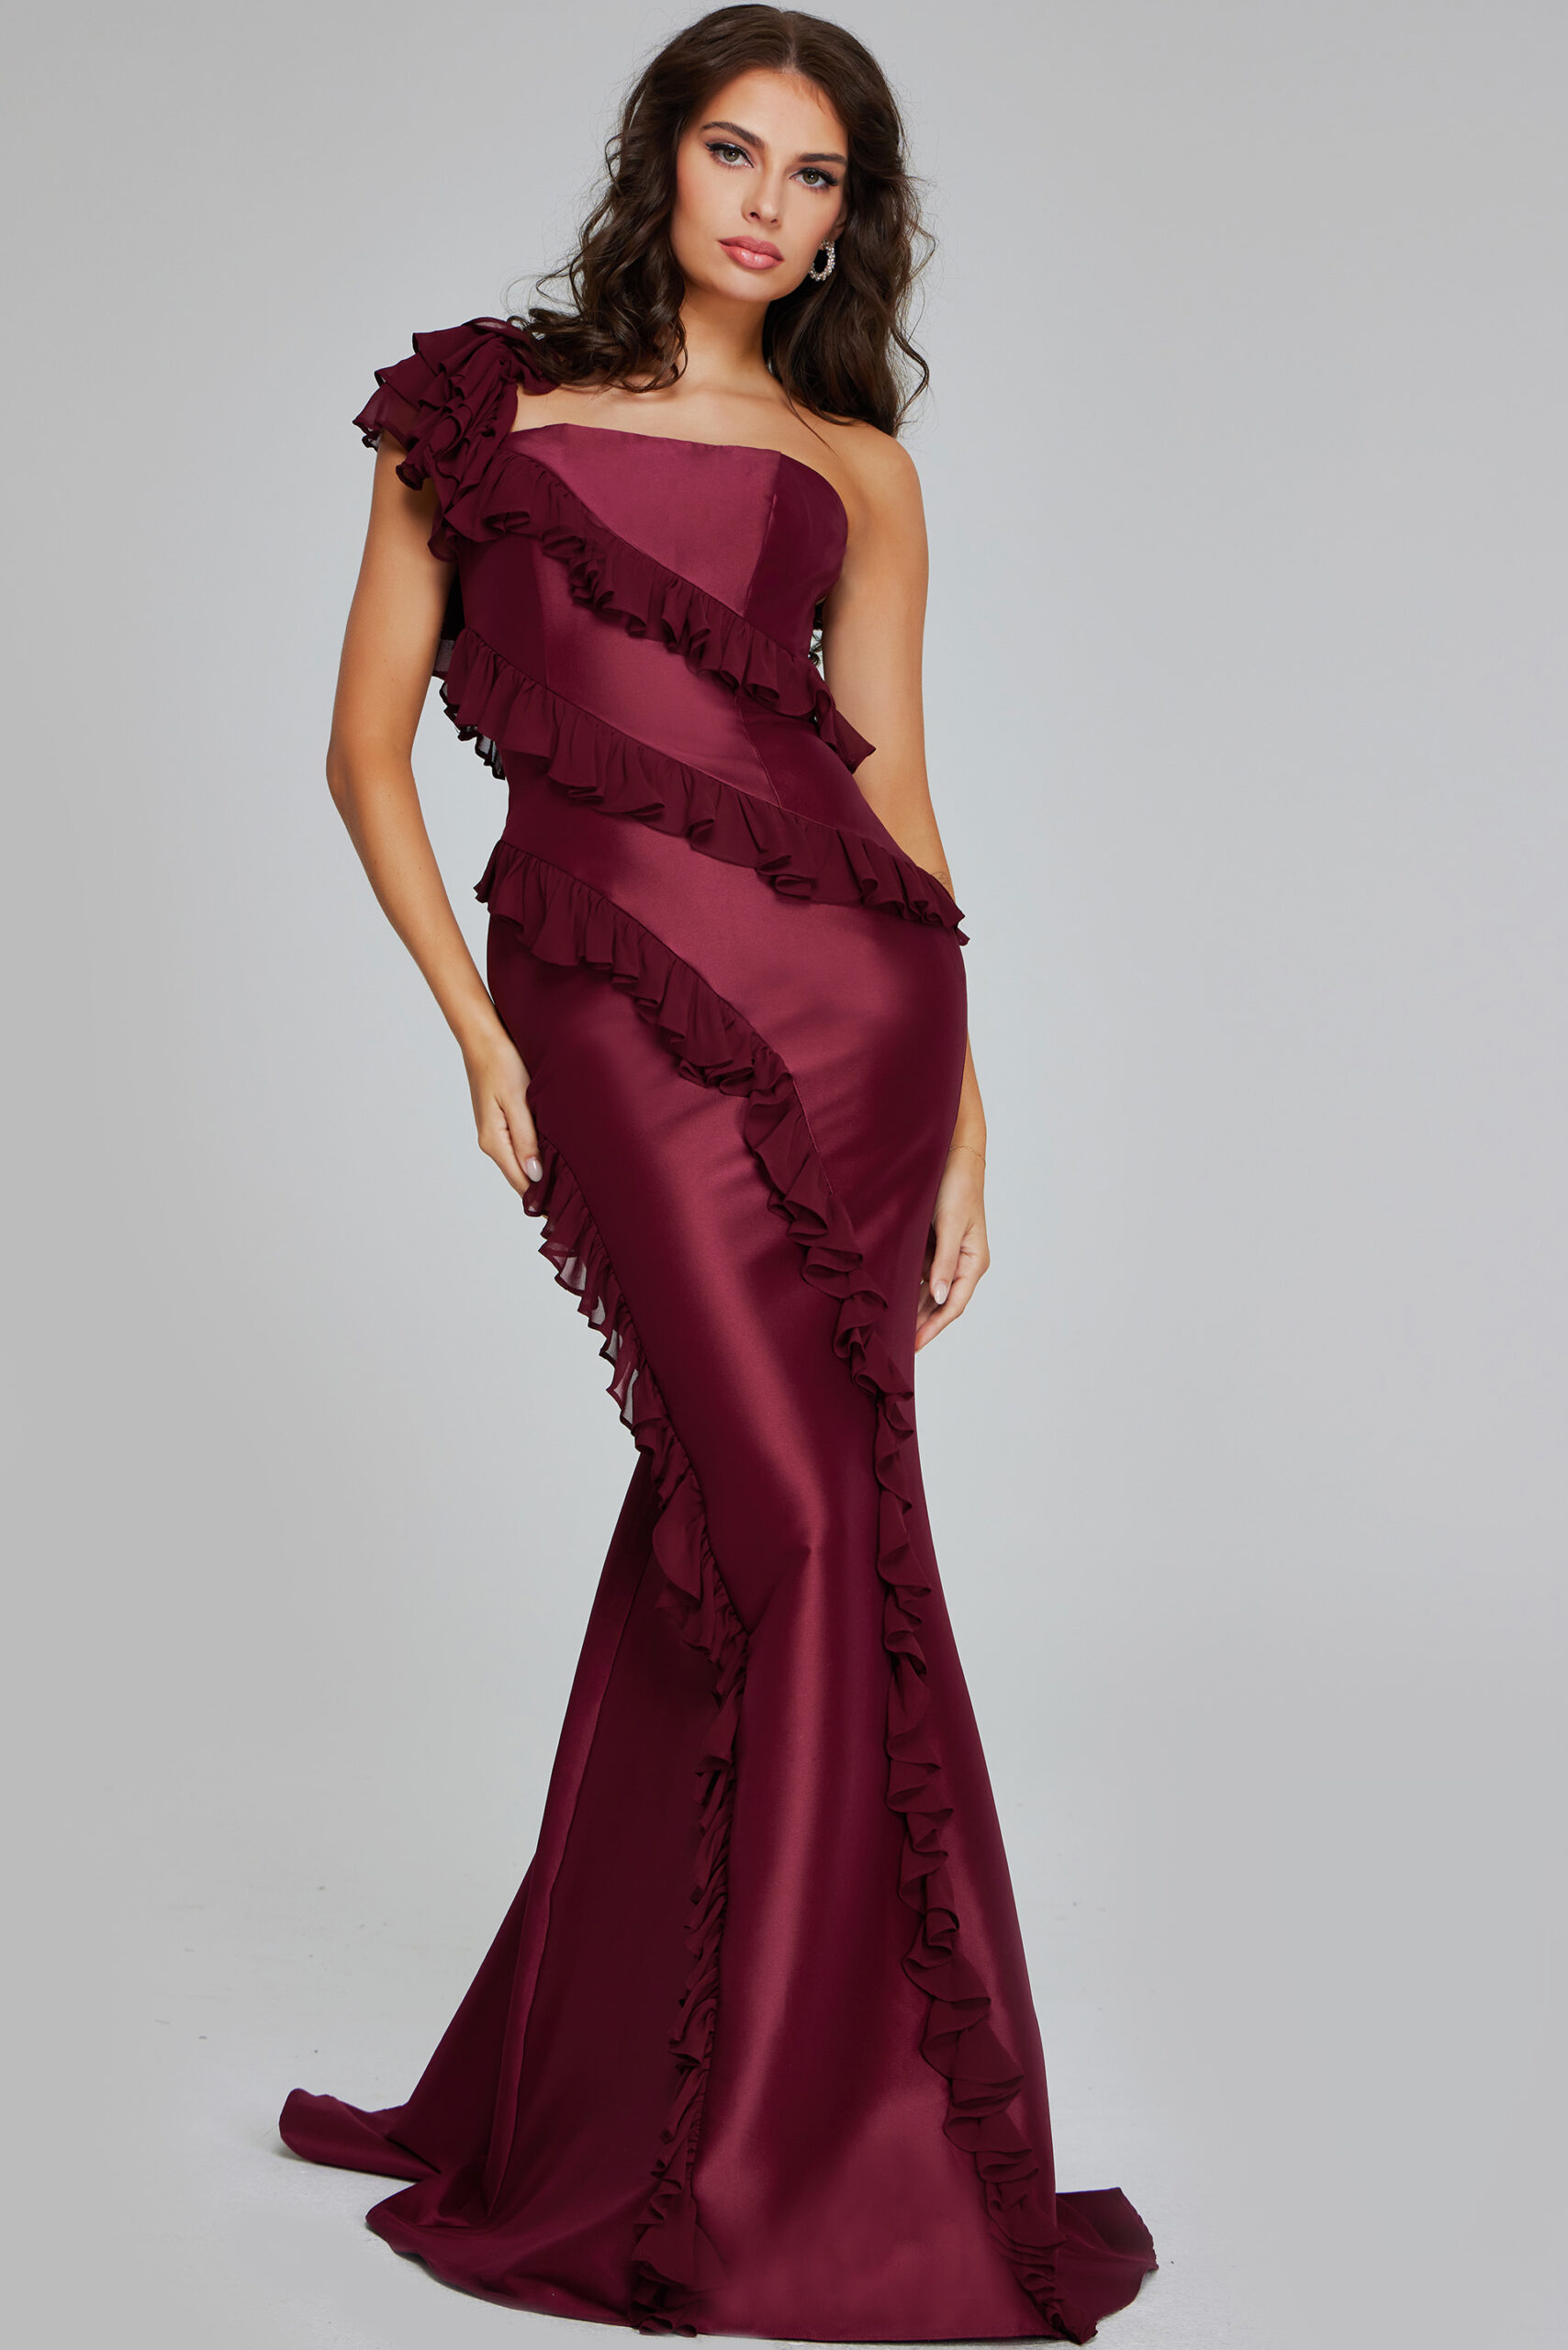 Model wearing Burgundy One-Shoulder Ruffled Gown 40751